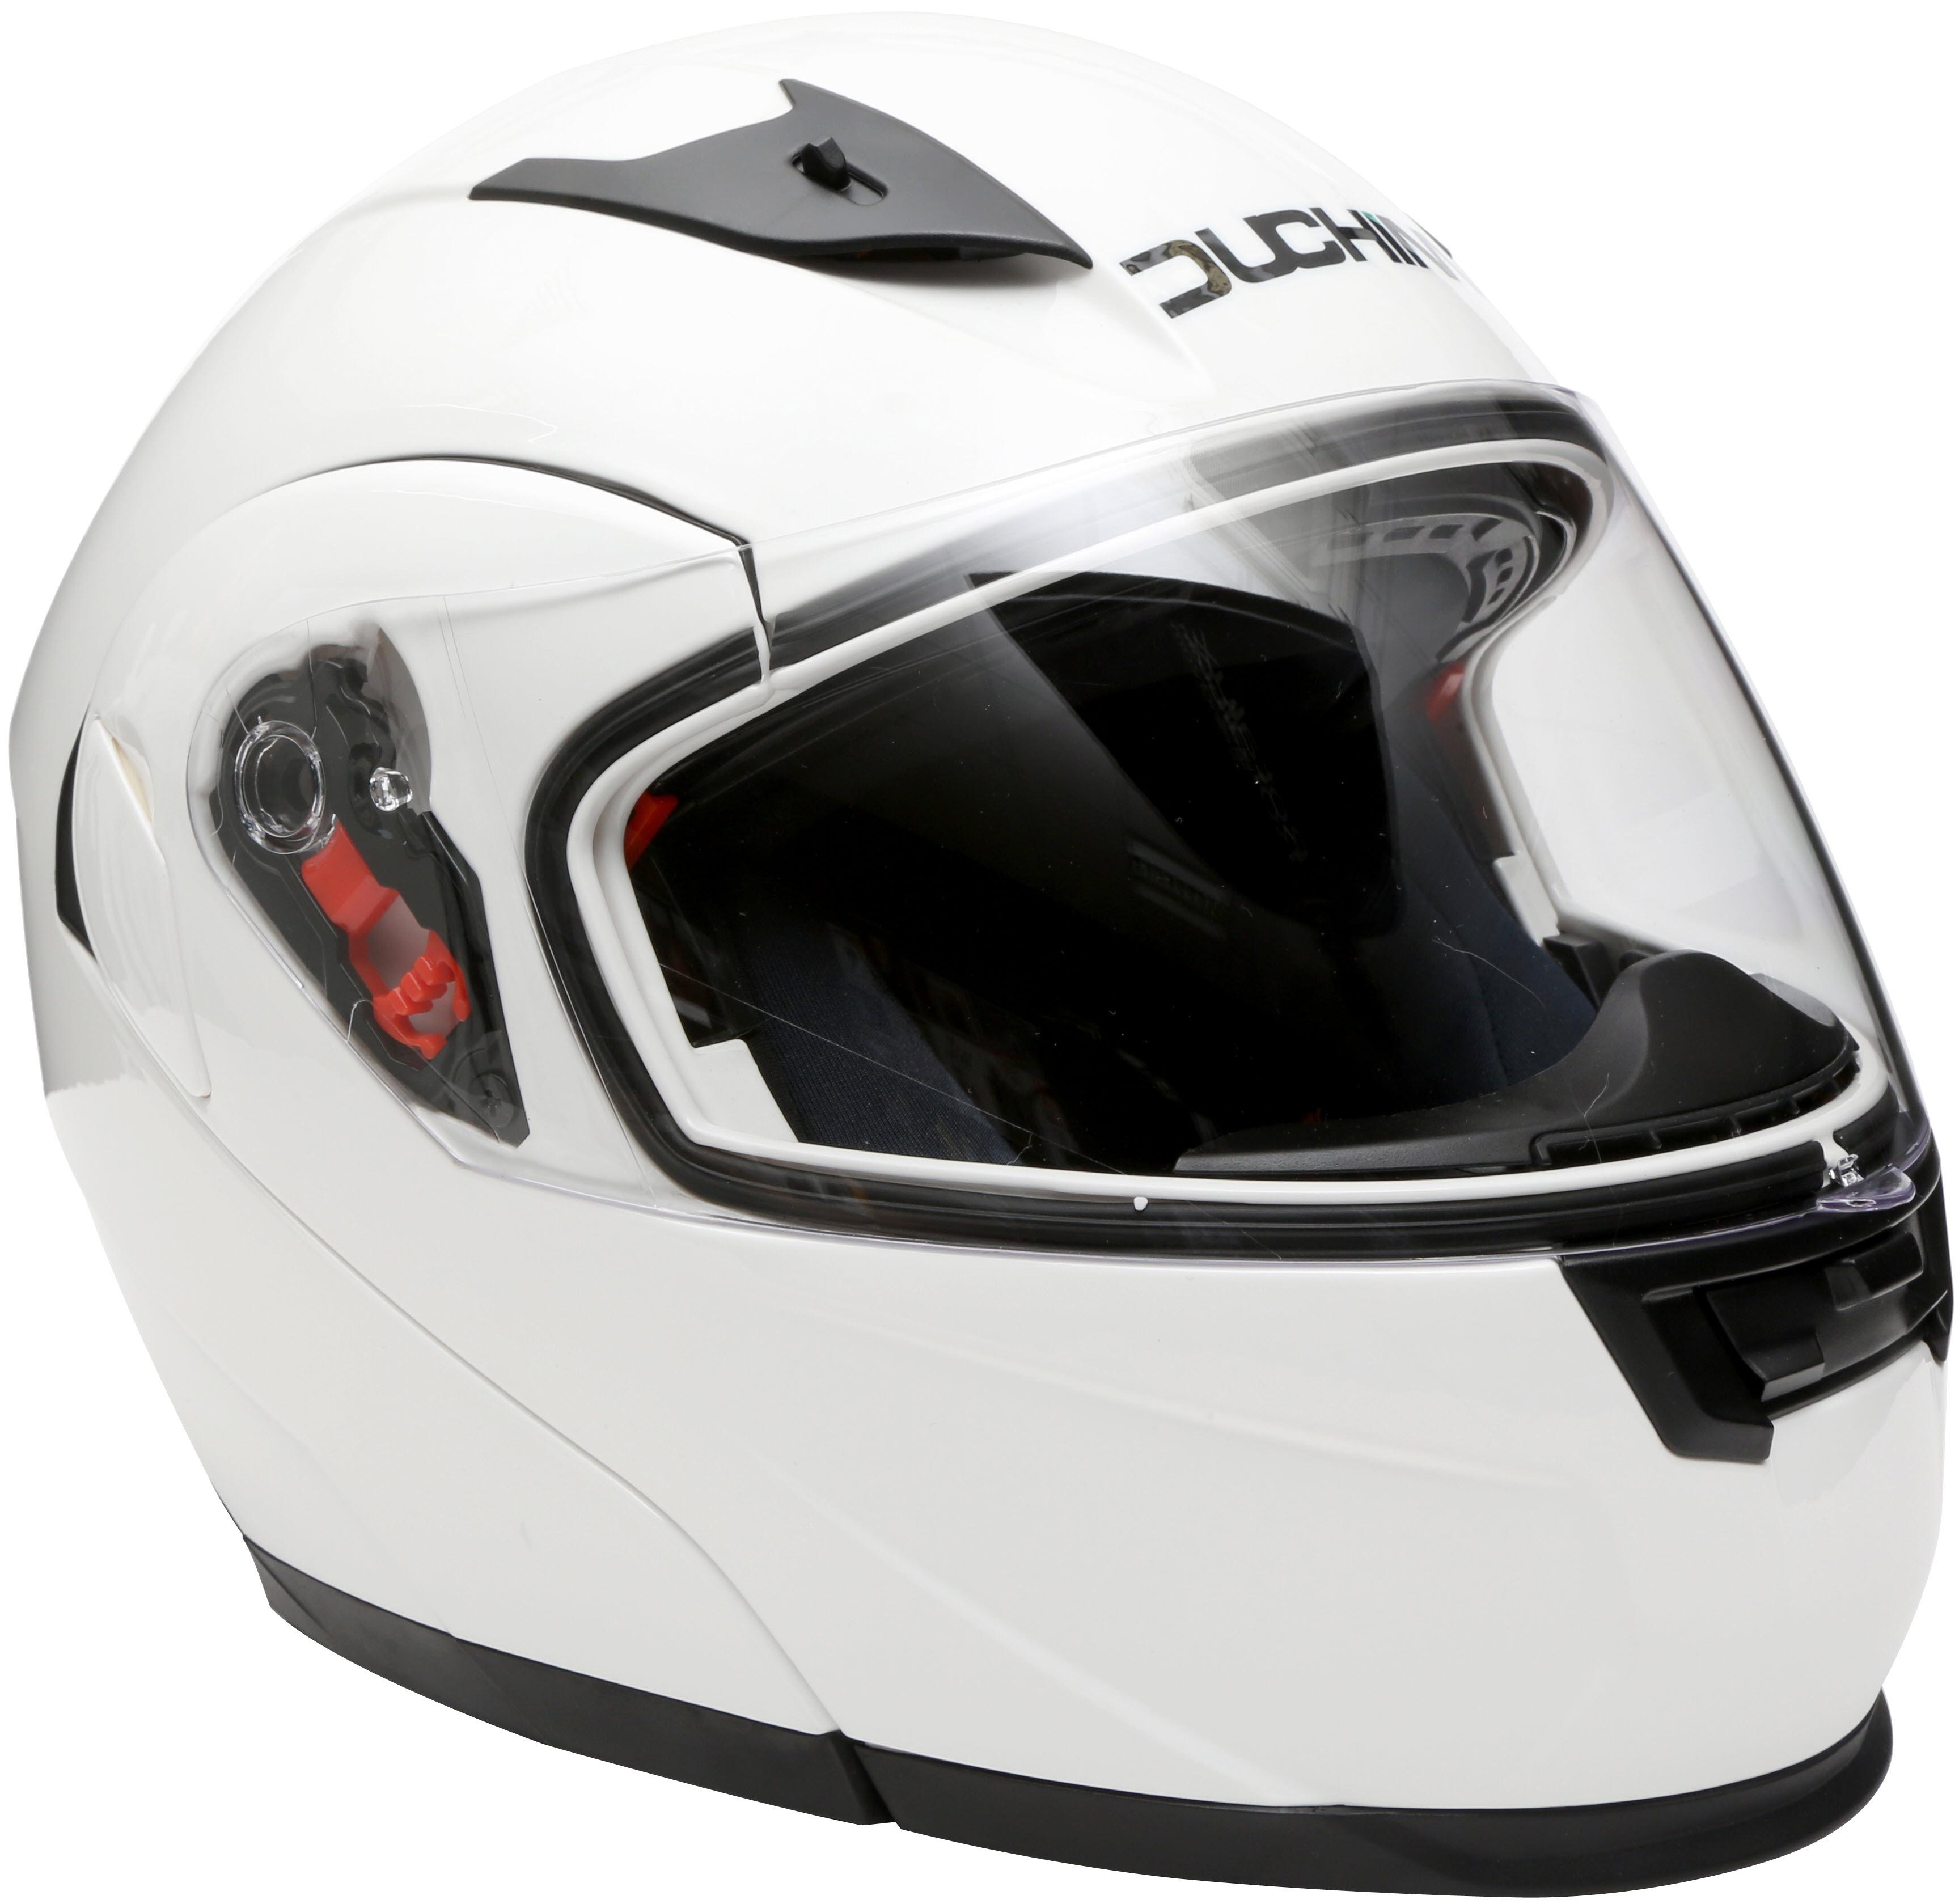 Duchinni Flip Front Helmet - White, Extra Large